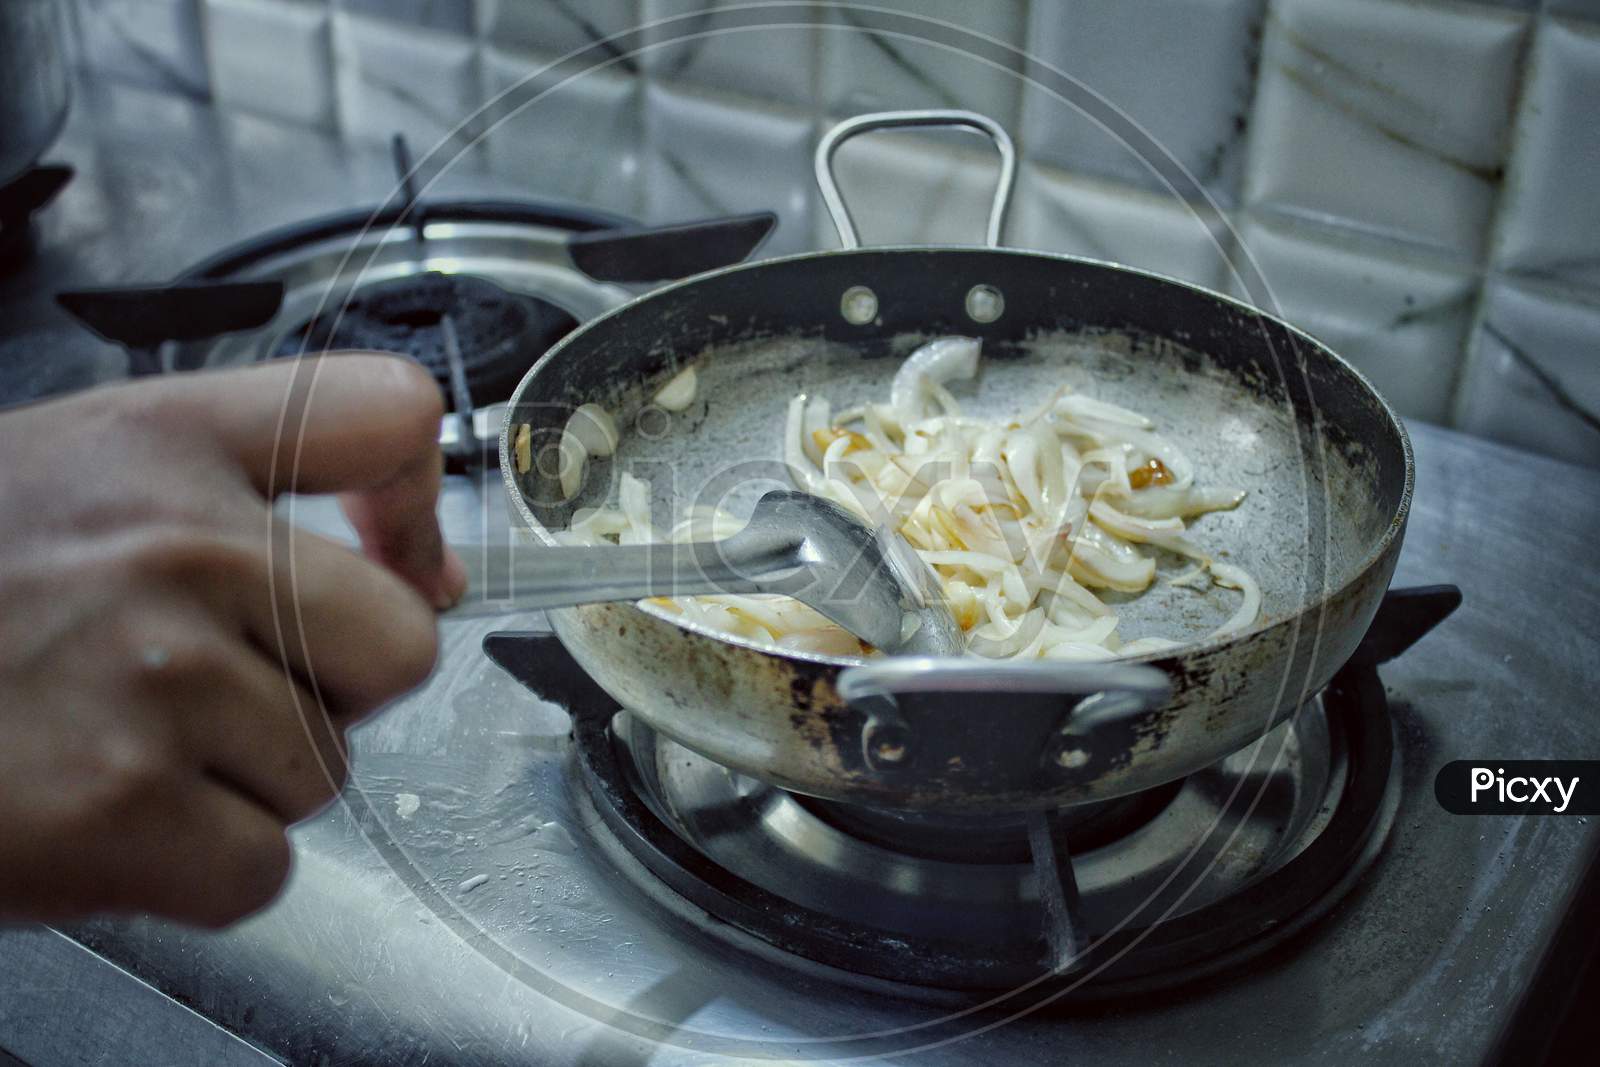 Frying Onion and garlic